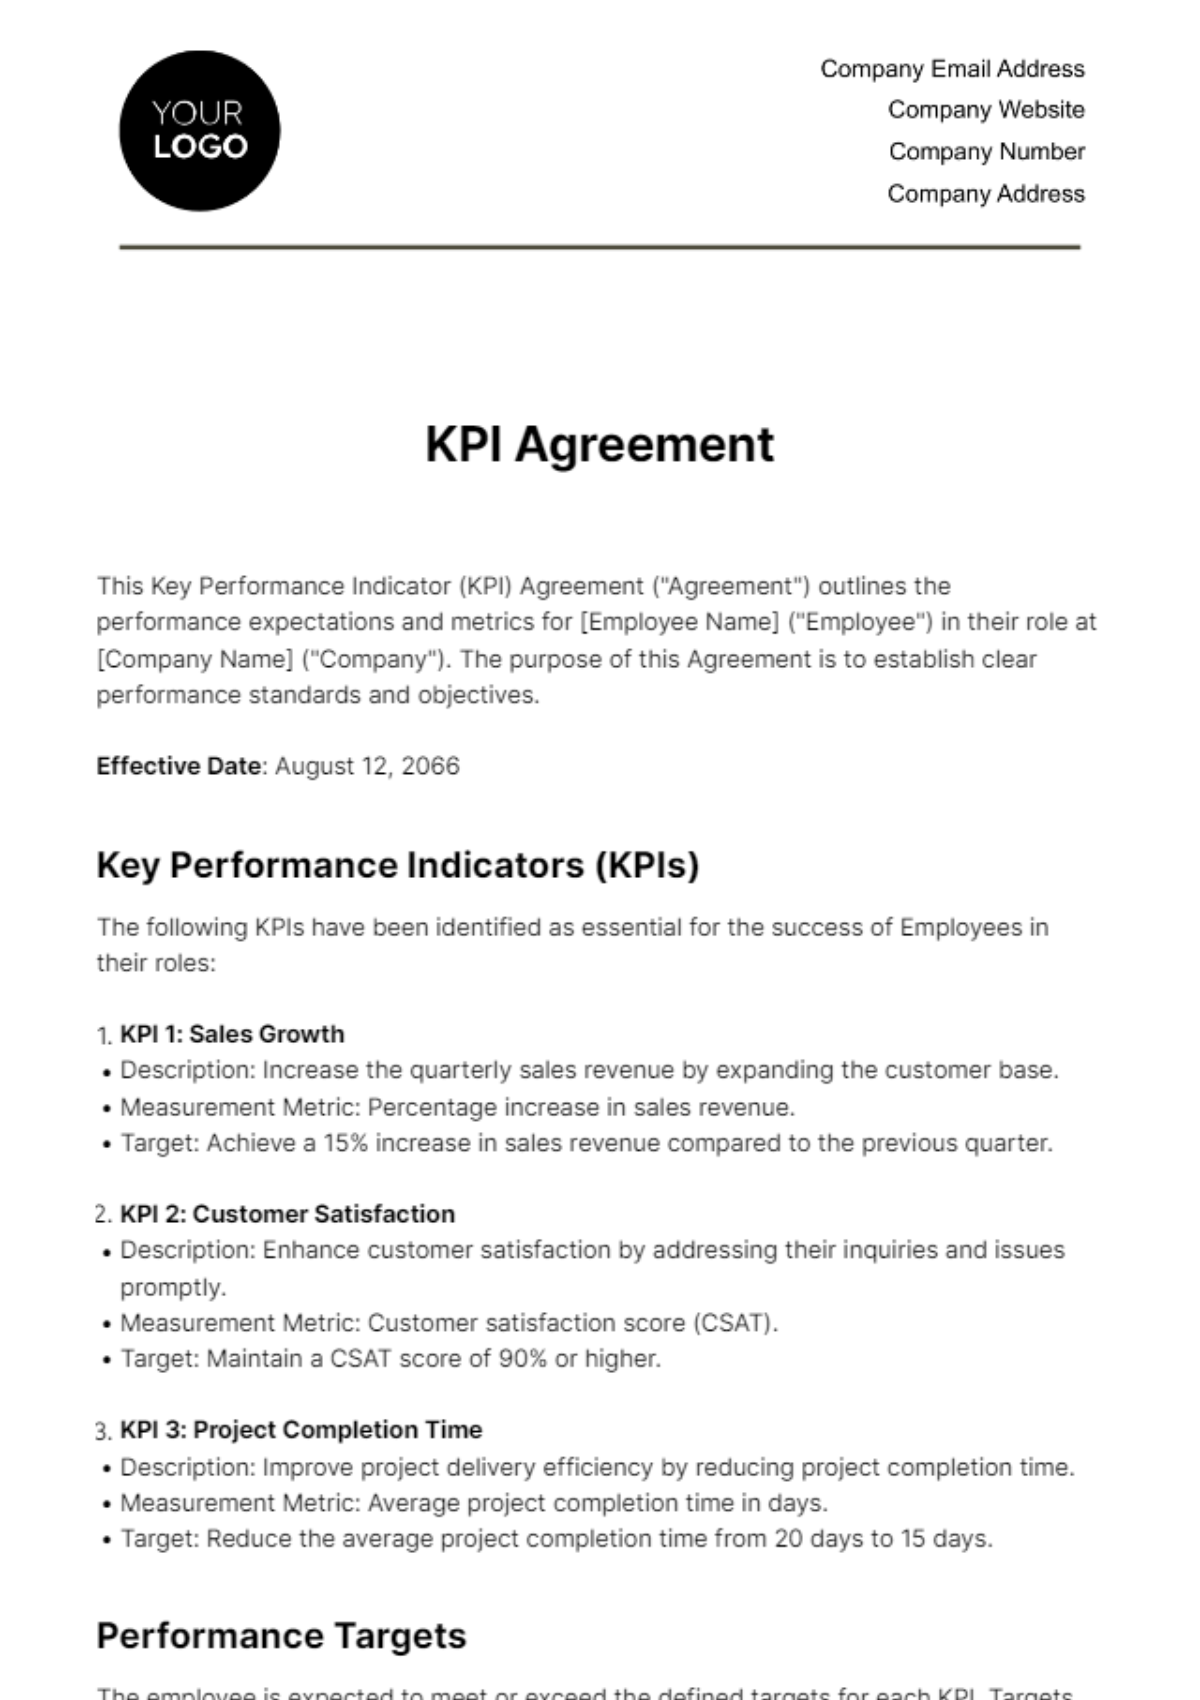 KPI Agreement HR Template